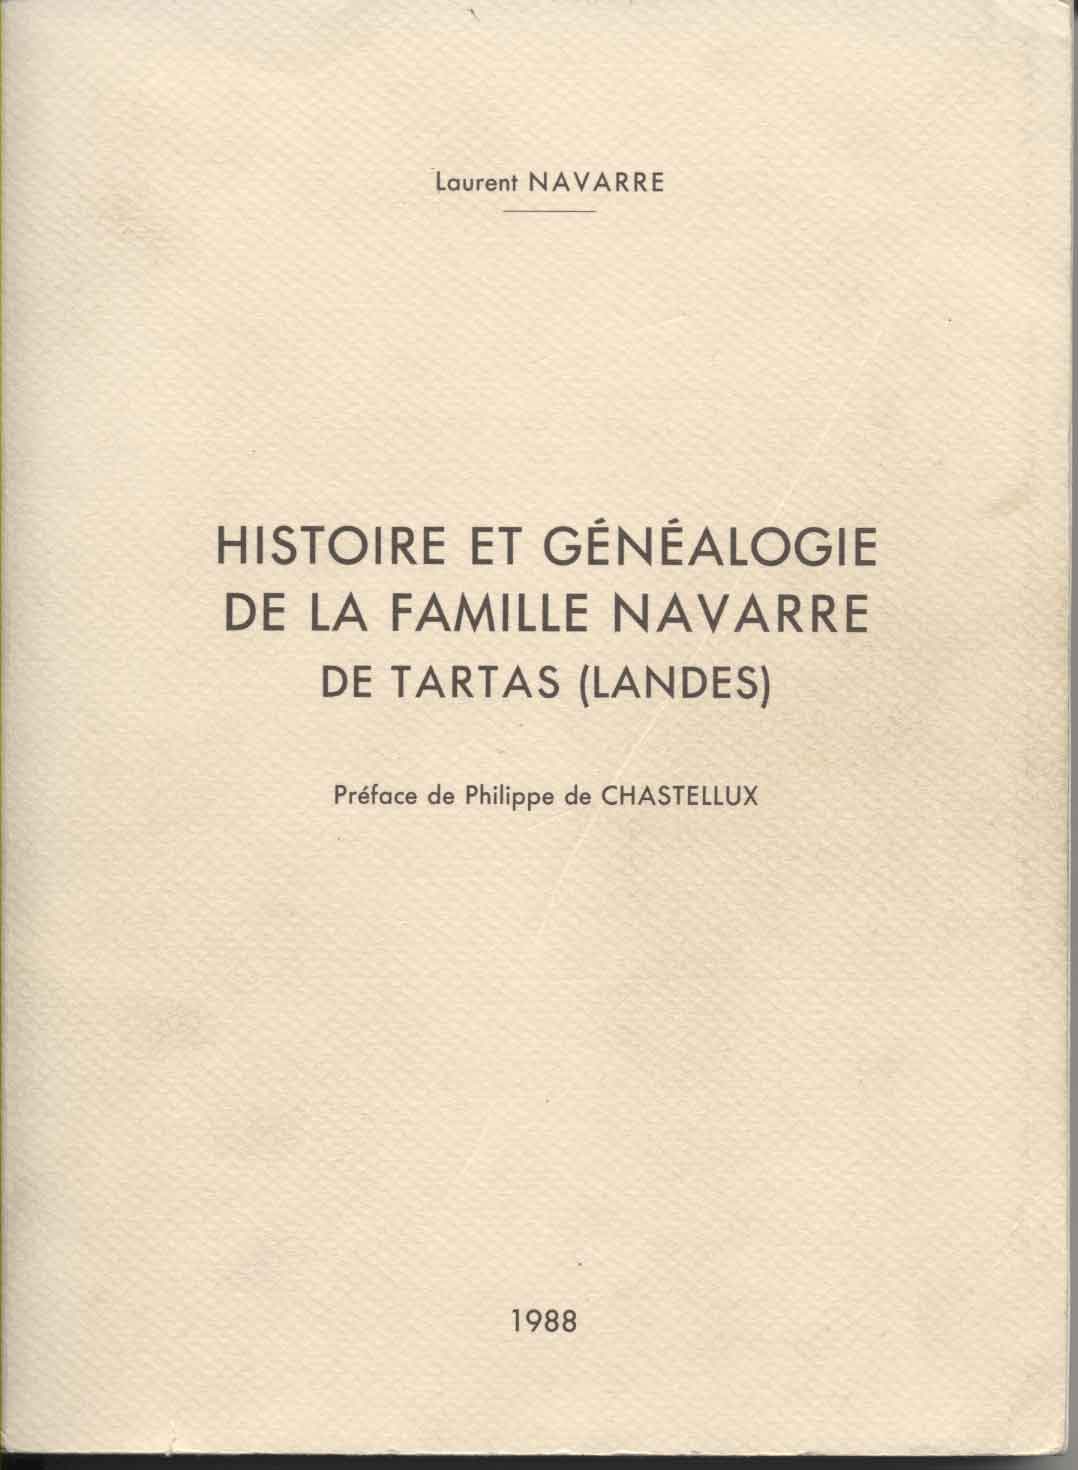 Livre Laurent Navarre